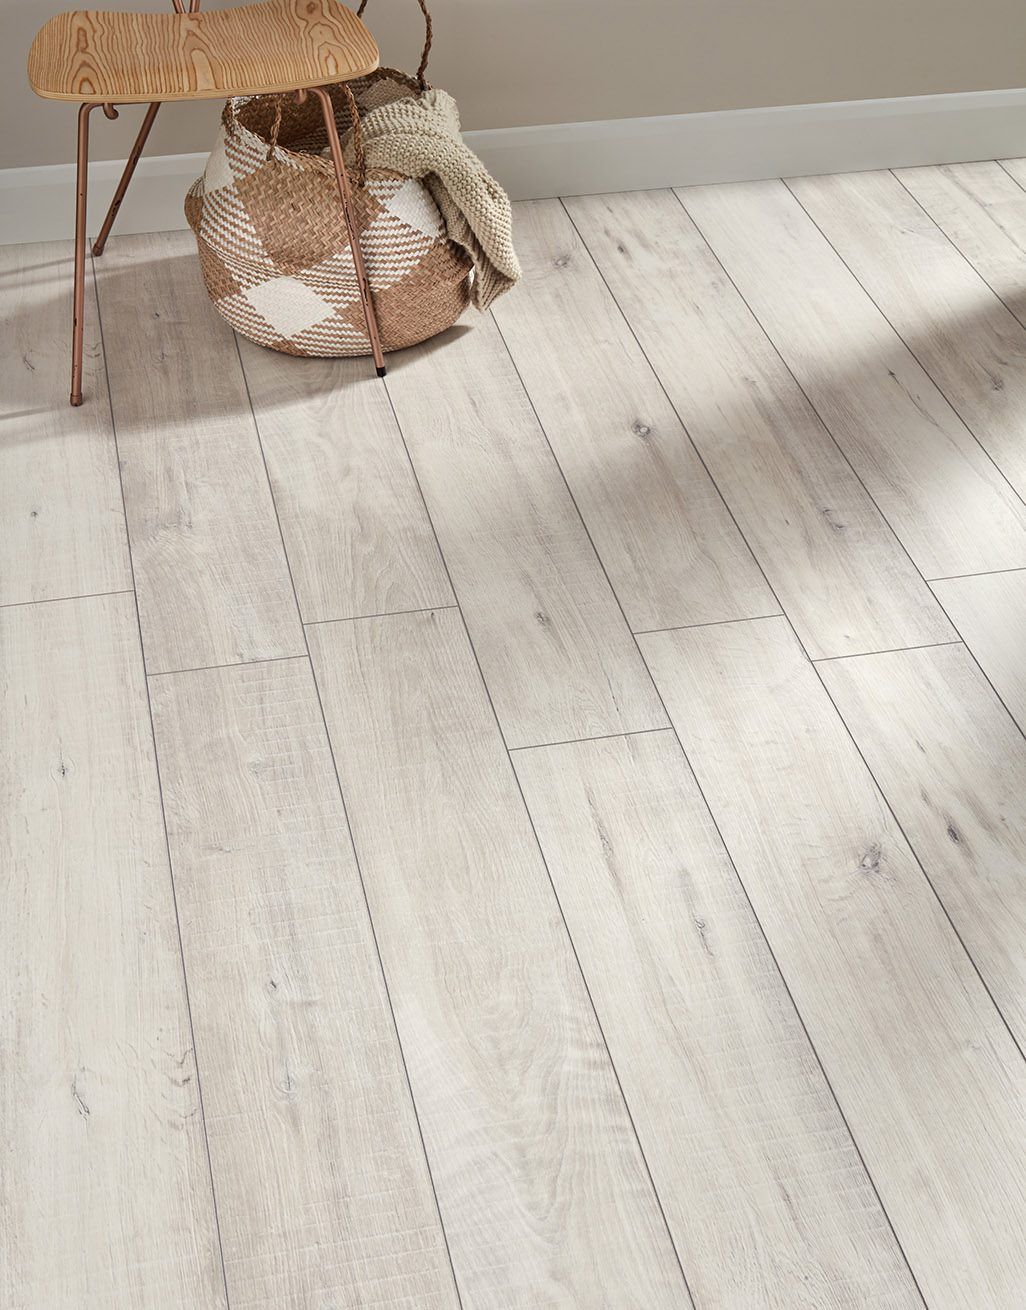 Gala Oak White Laminate Flooring, White Wood Grain Laminate Flooring